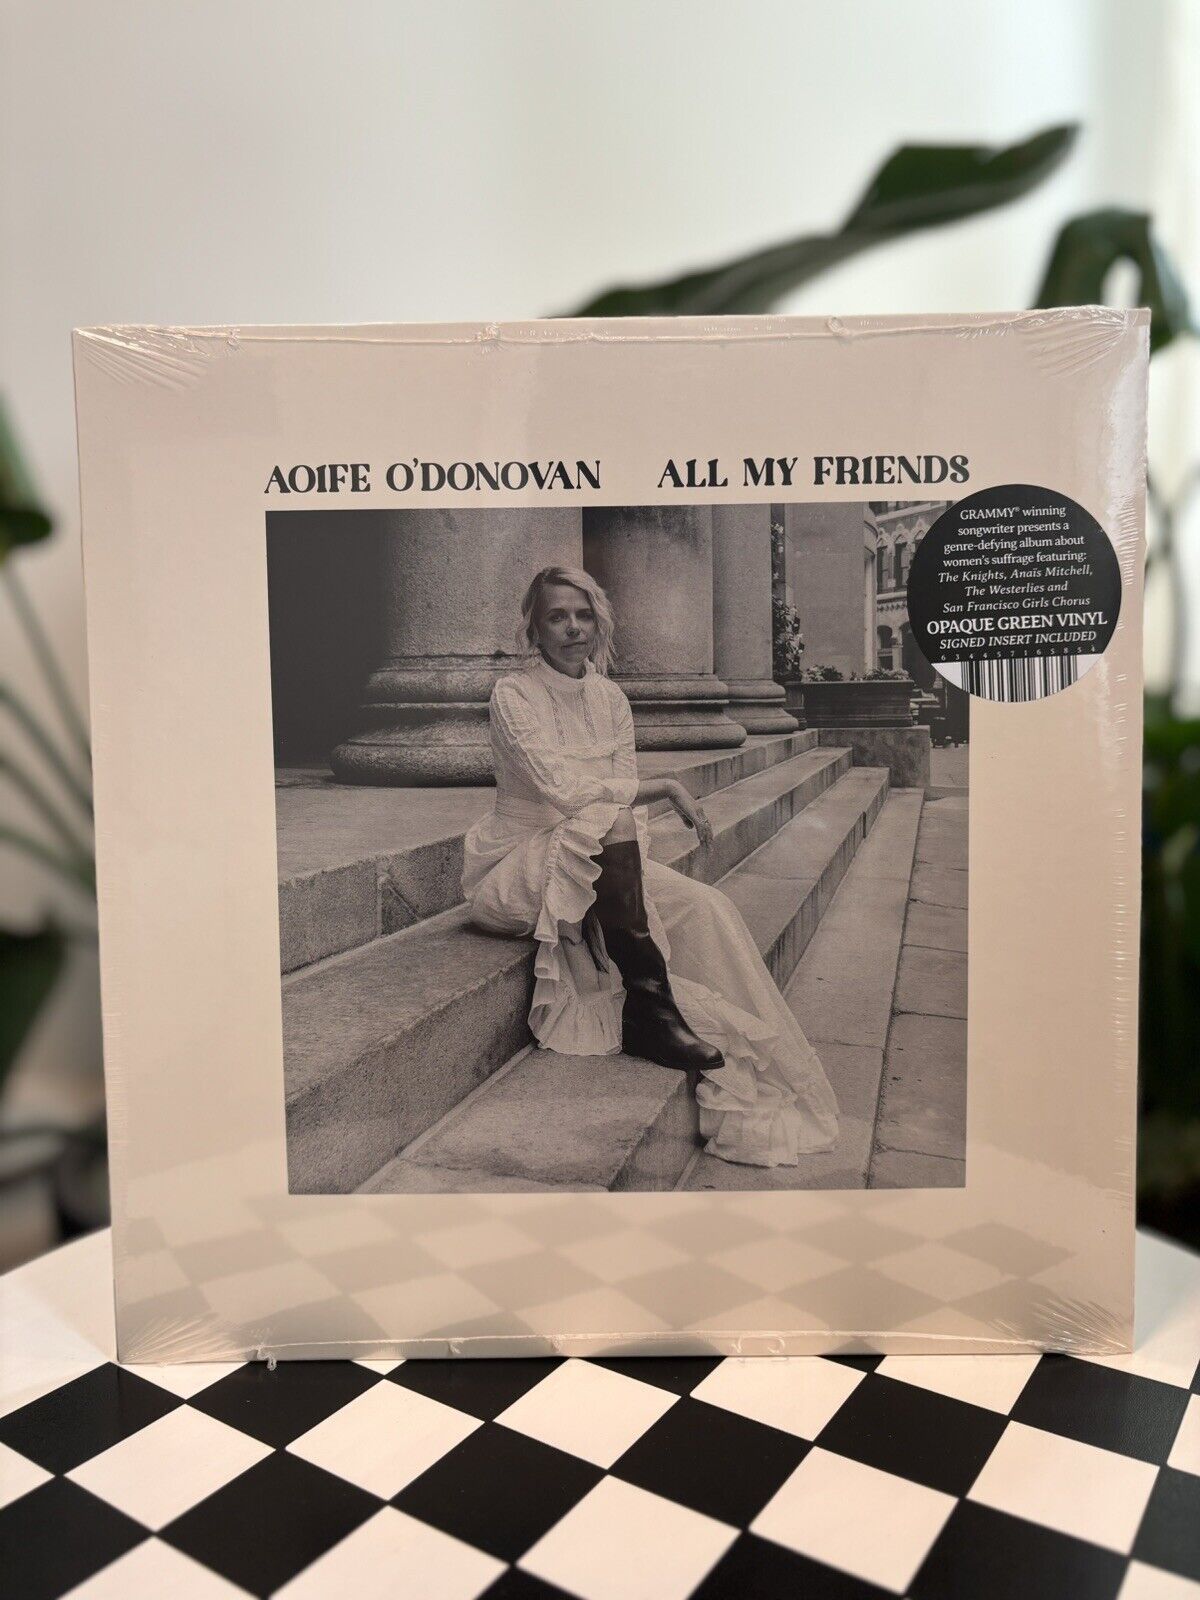 Aoife O'Donovan - All My Friends [New Vinyl LP] OPAGUE GREEN VINYL SIGNED INSERT